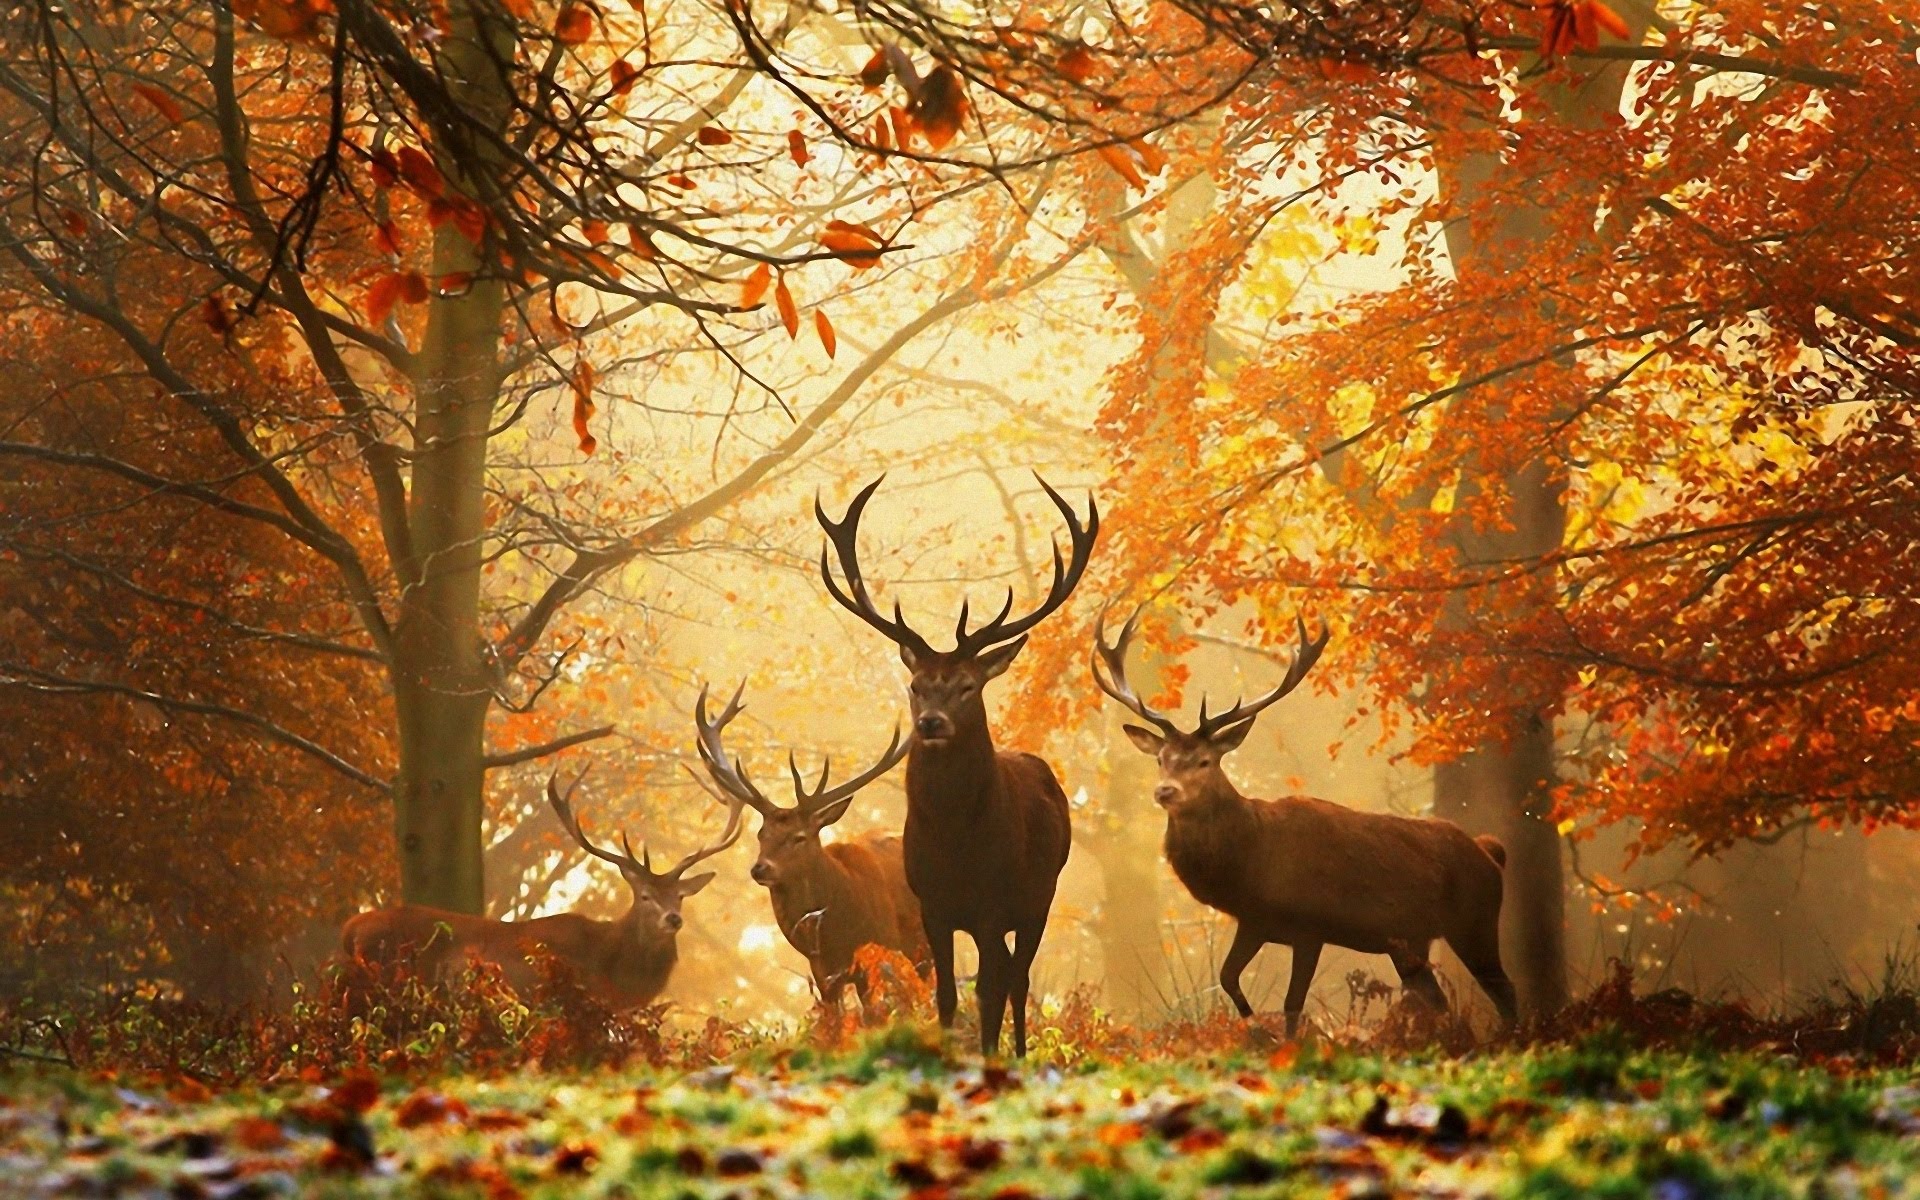 Wallpapers forest deer autumn on the desktop